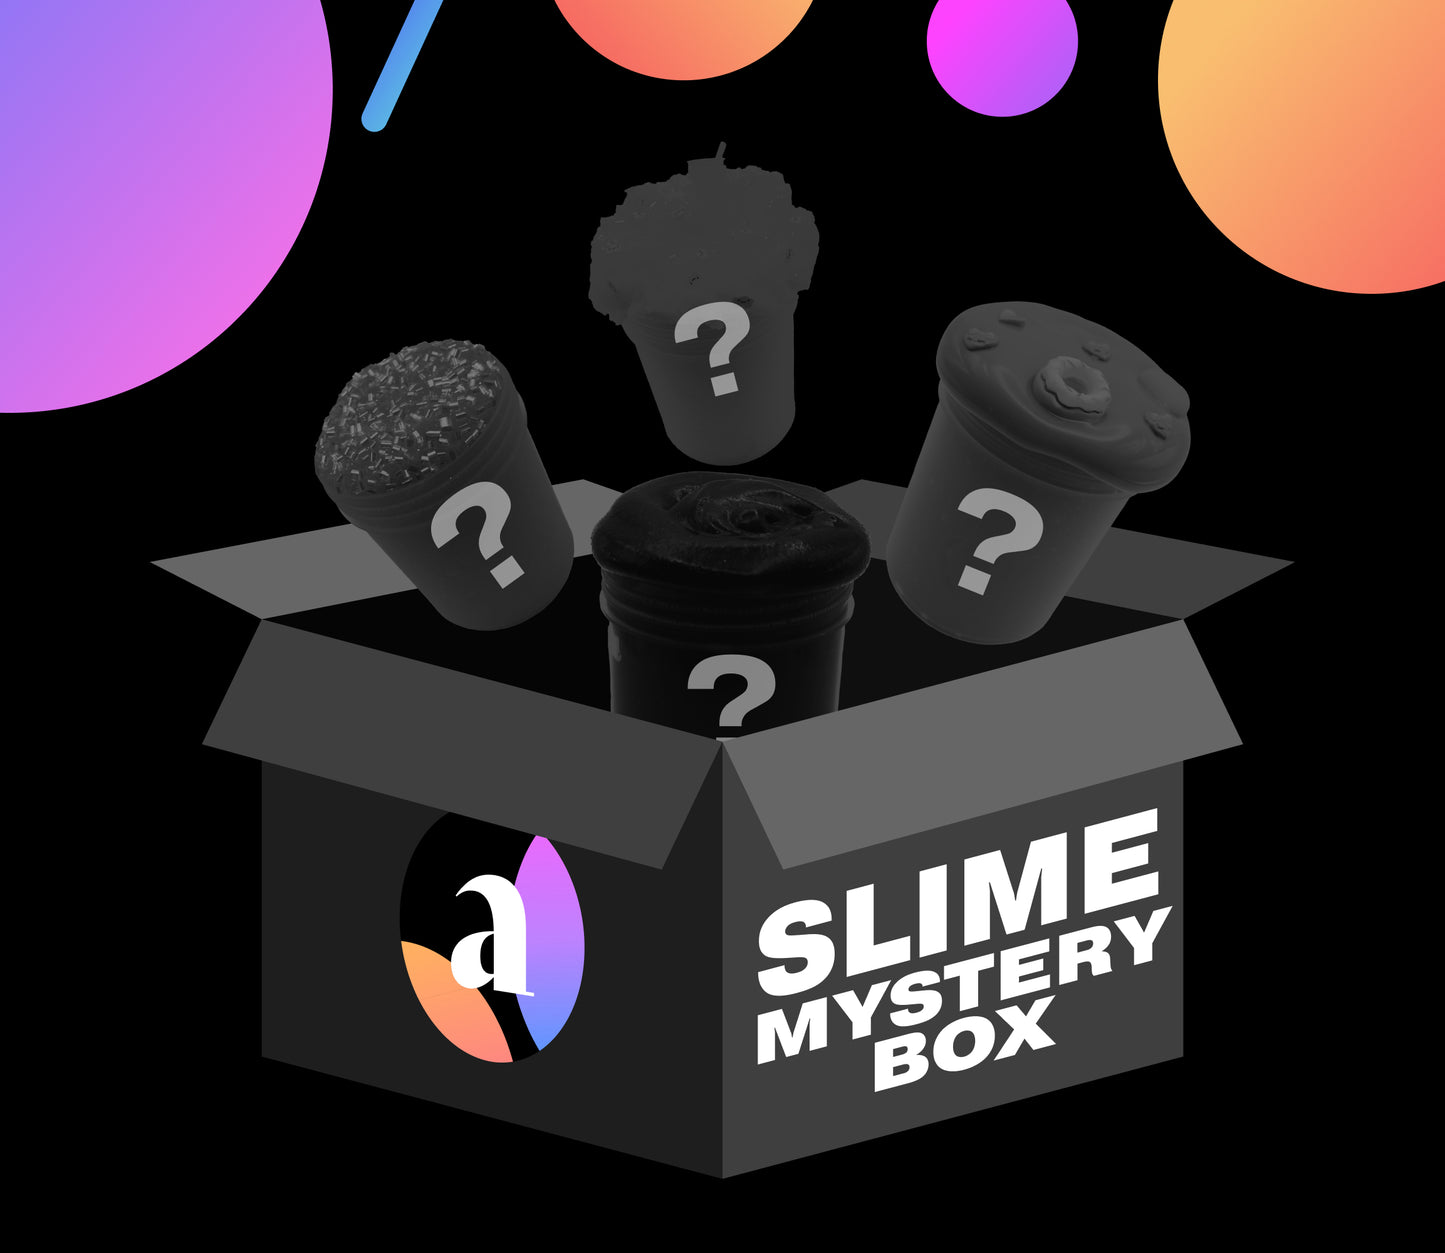 Slime Mystery Box